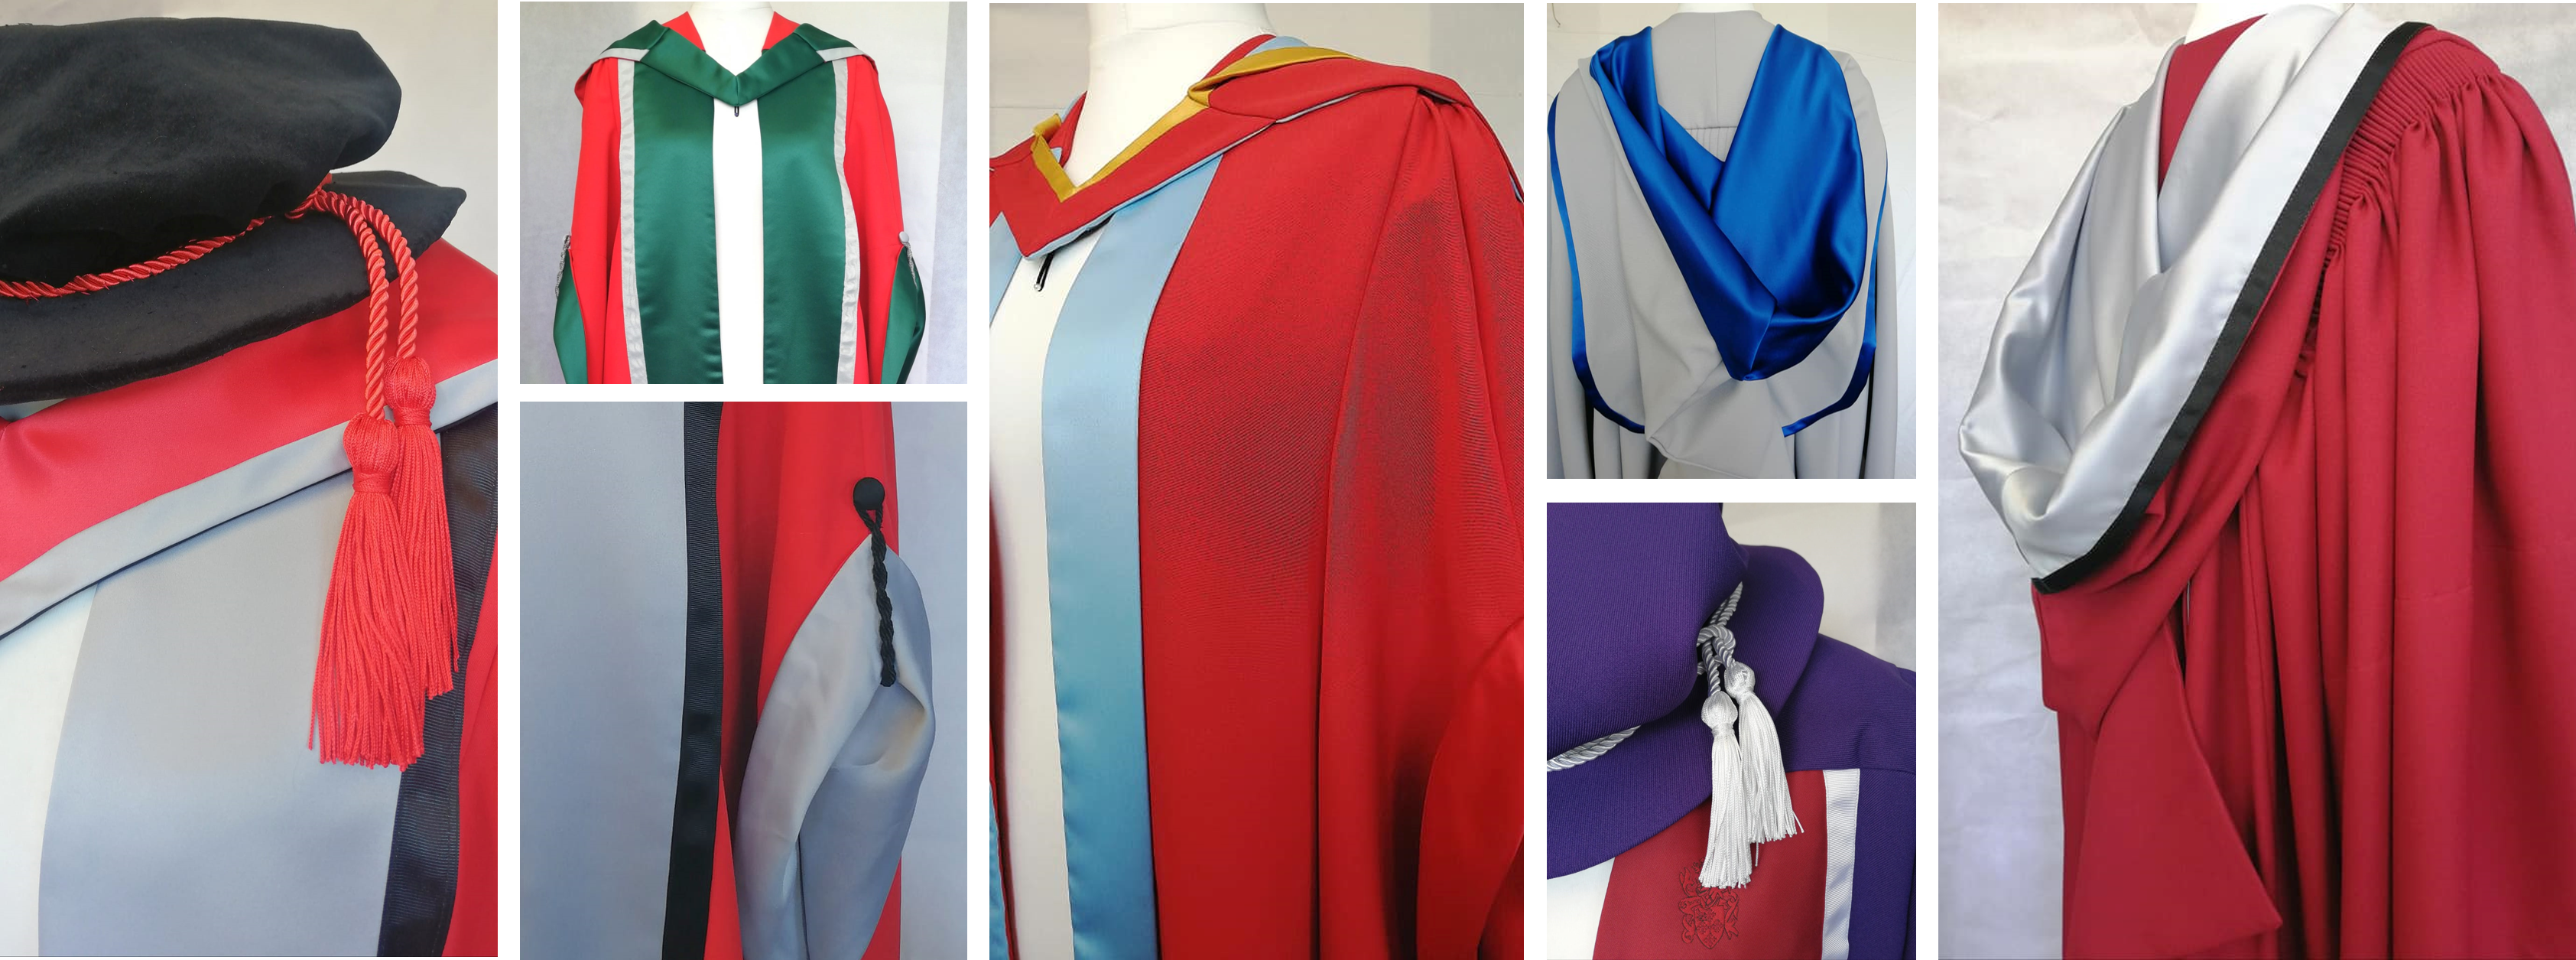 Handmade PhD Gowns